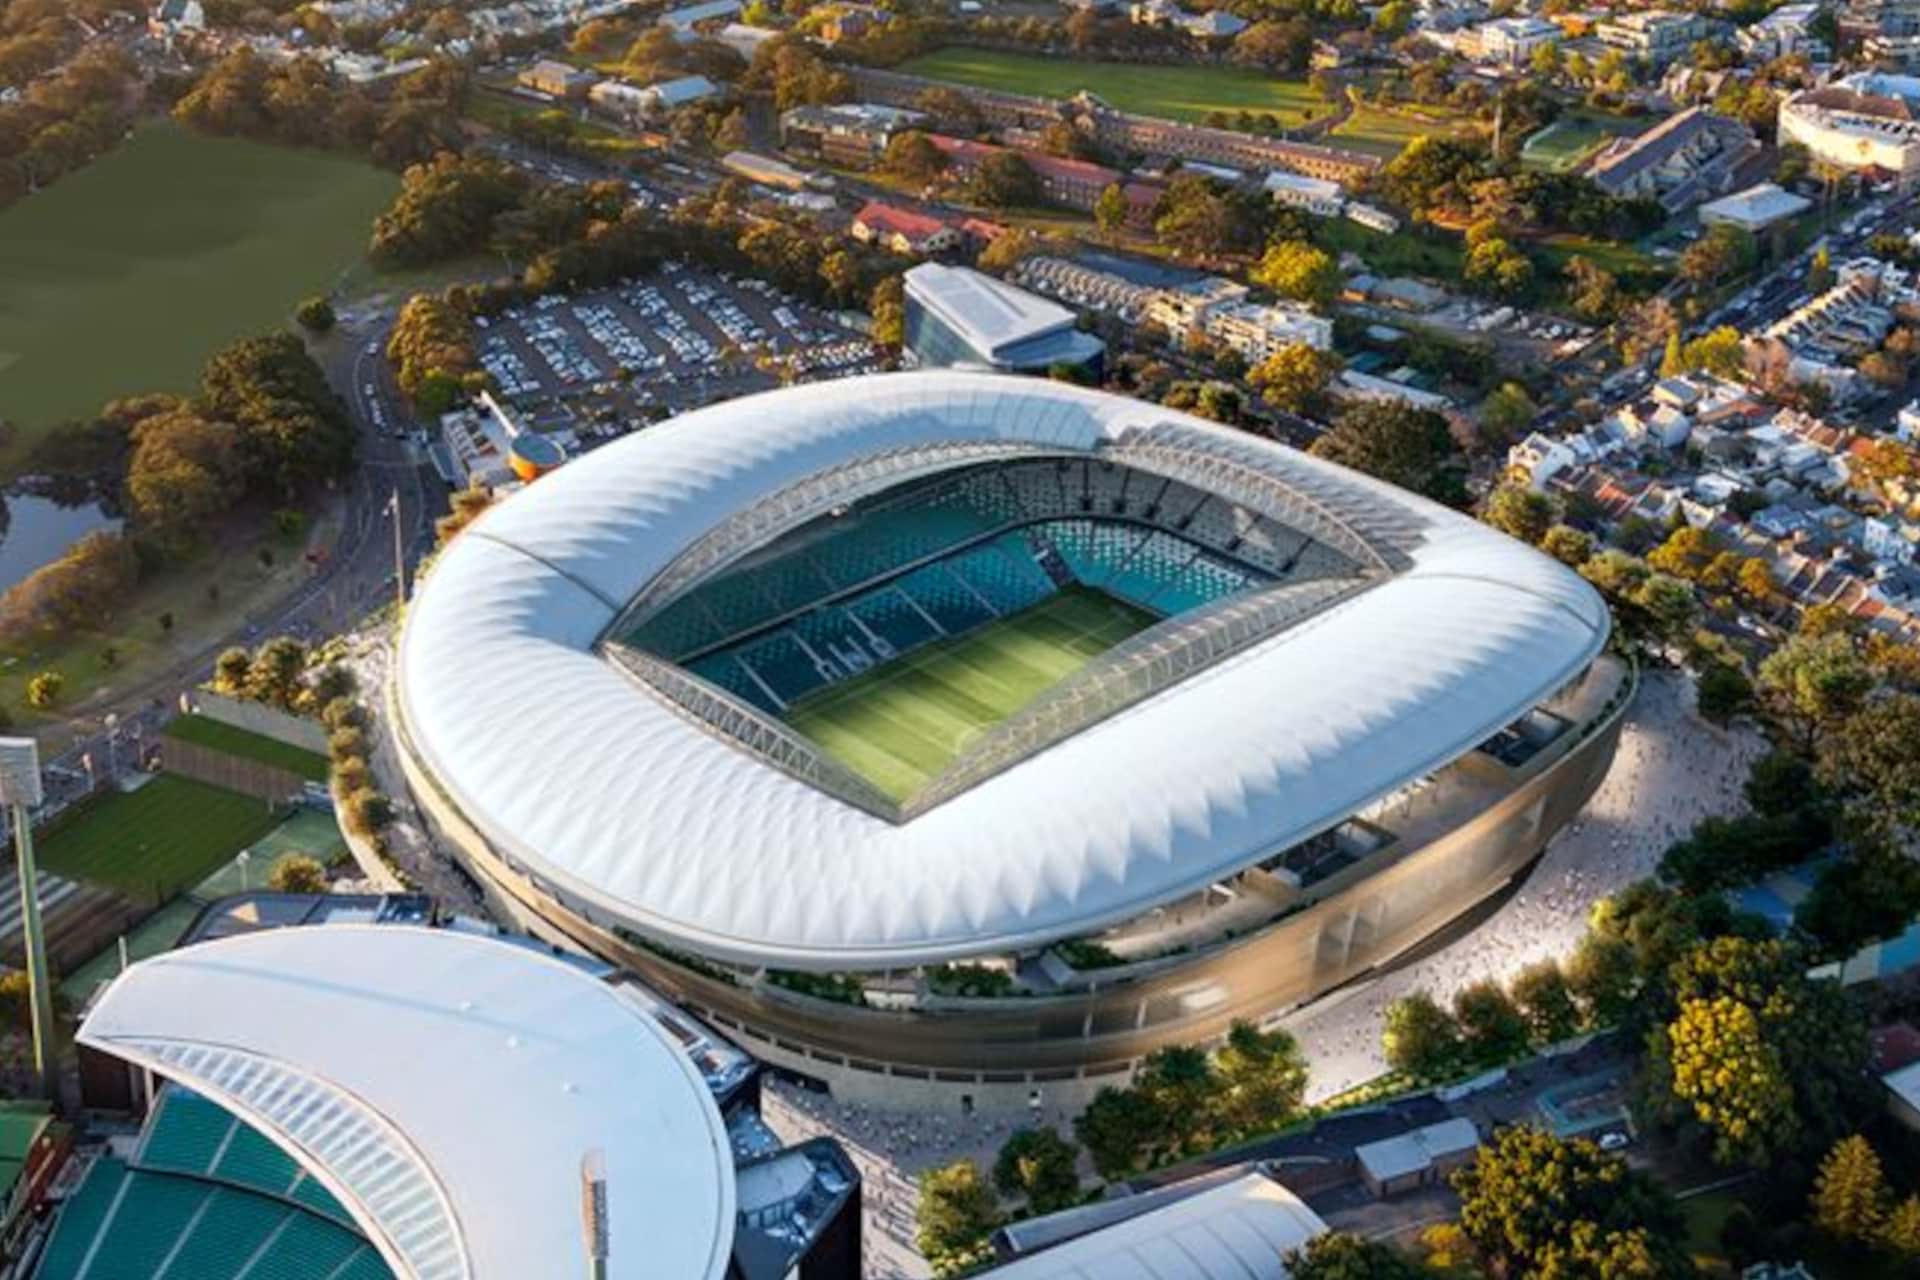 Sydney football stadium concept